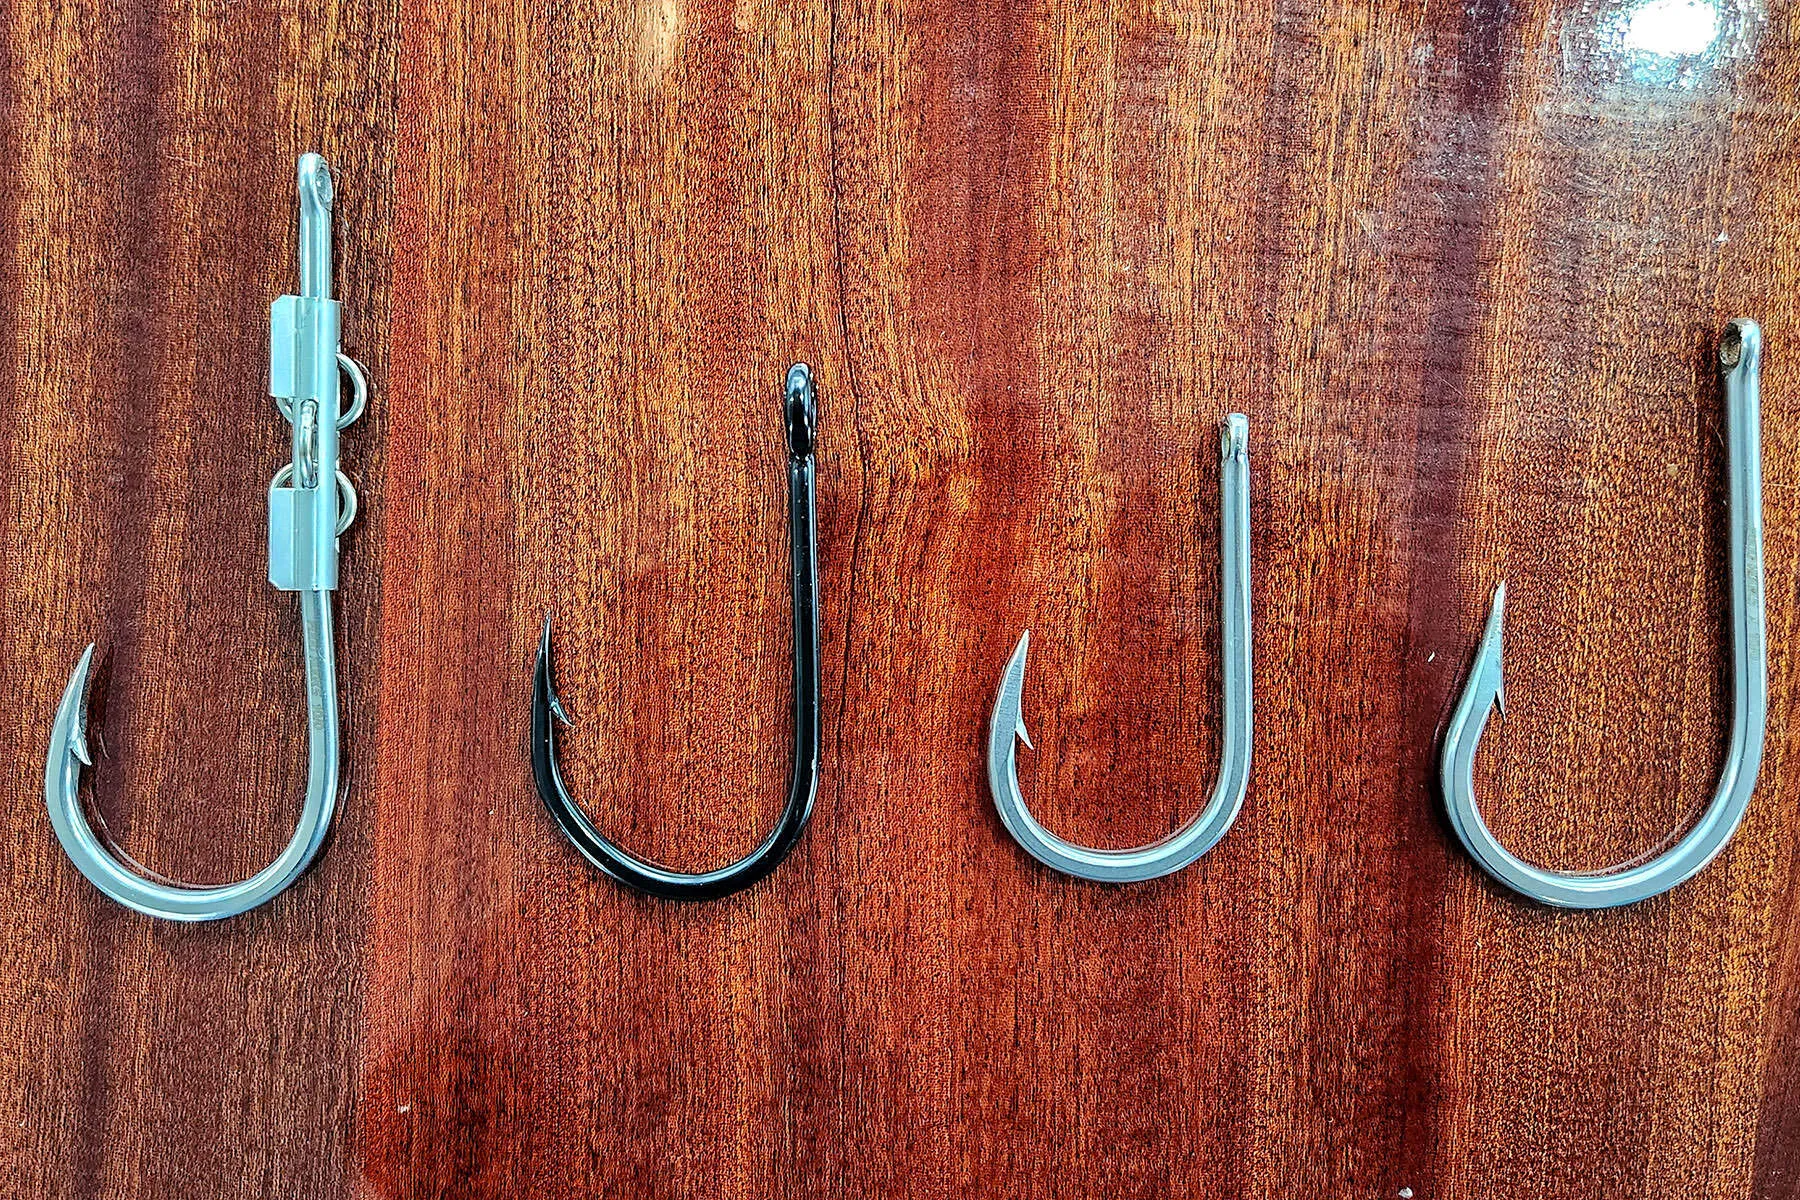 hooks for blue marlin fishing including the sta-stuk hook